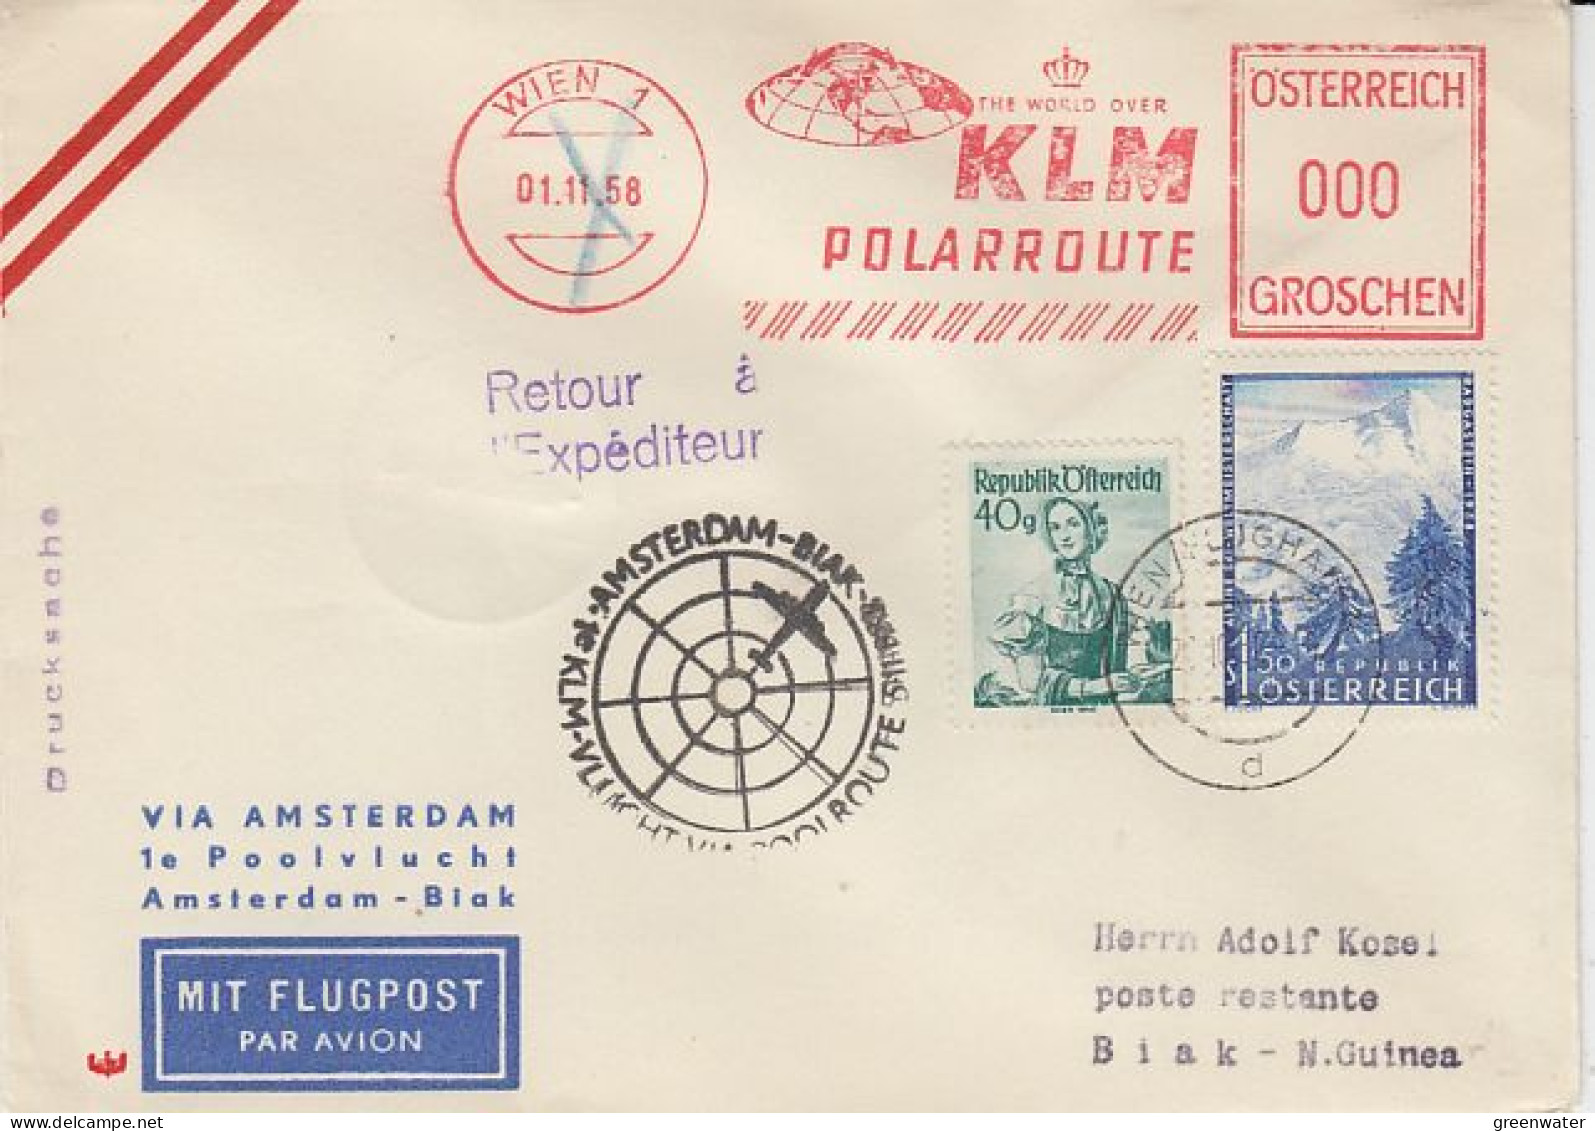 Austria 1958 KLM Polarroute 1st Flight Amsterdam- Biak New Guinea Cover (59621) - Storia Postale